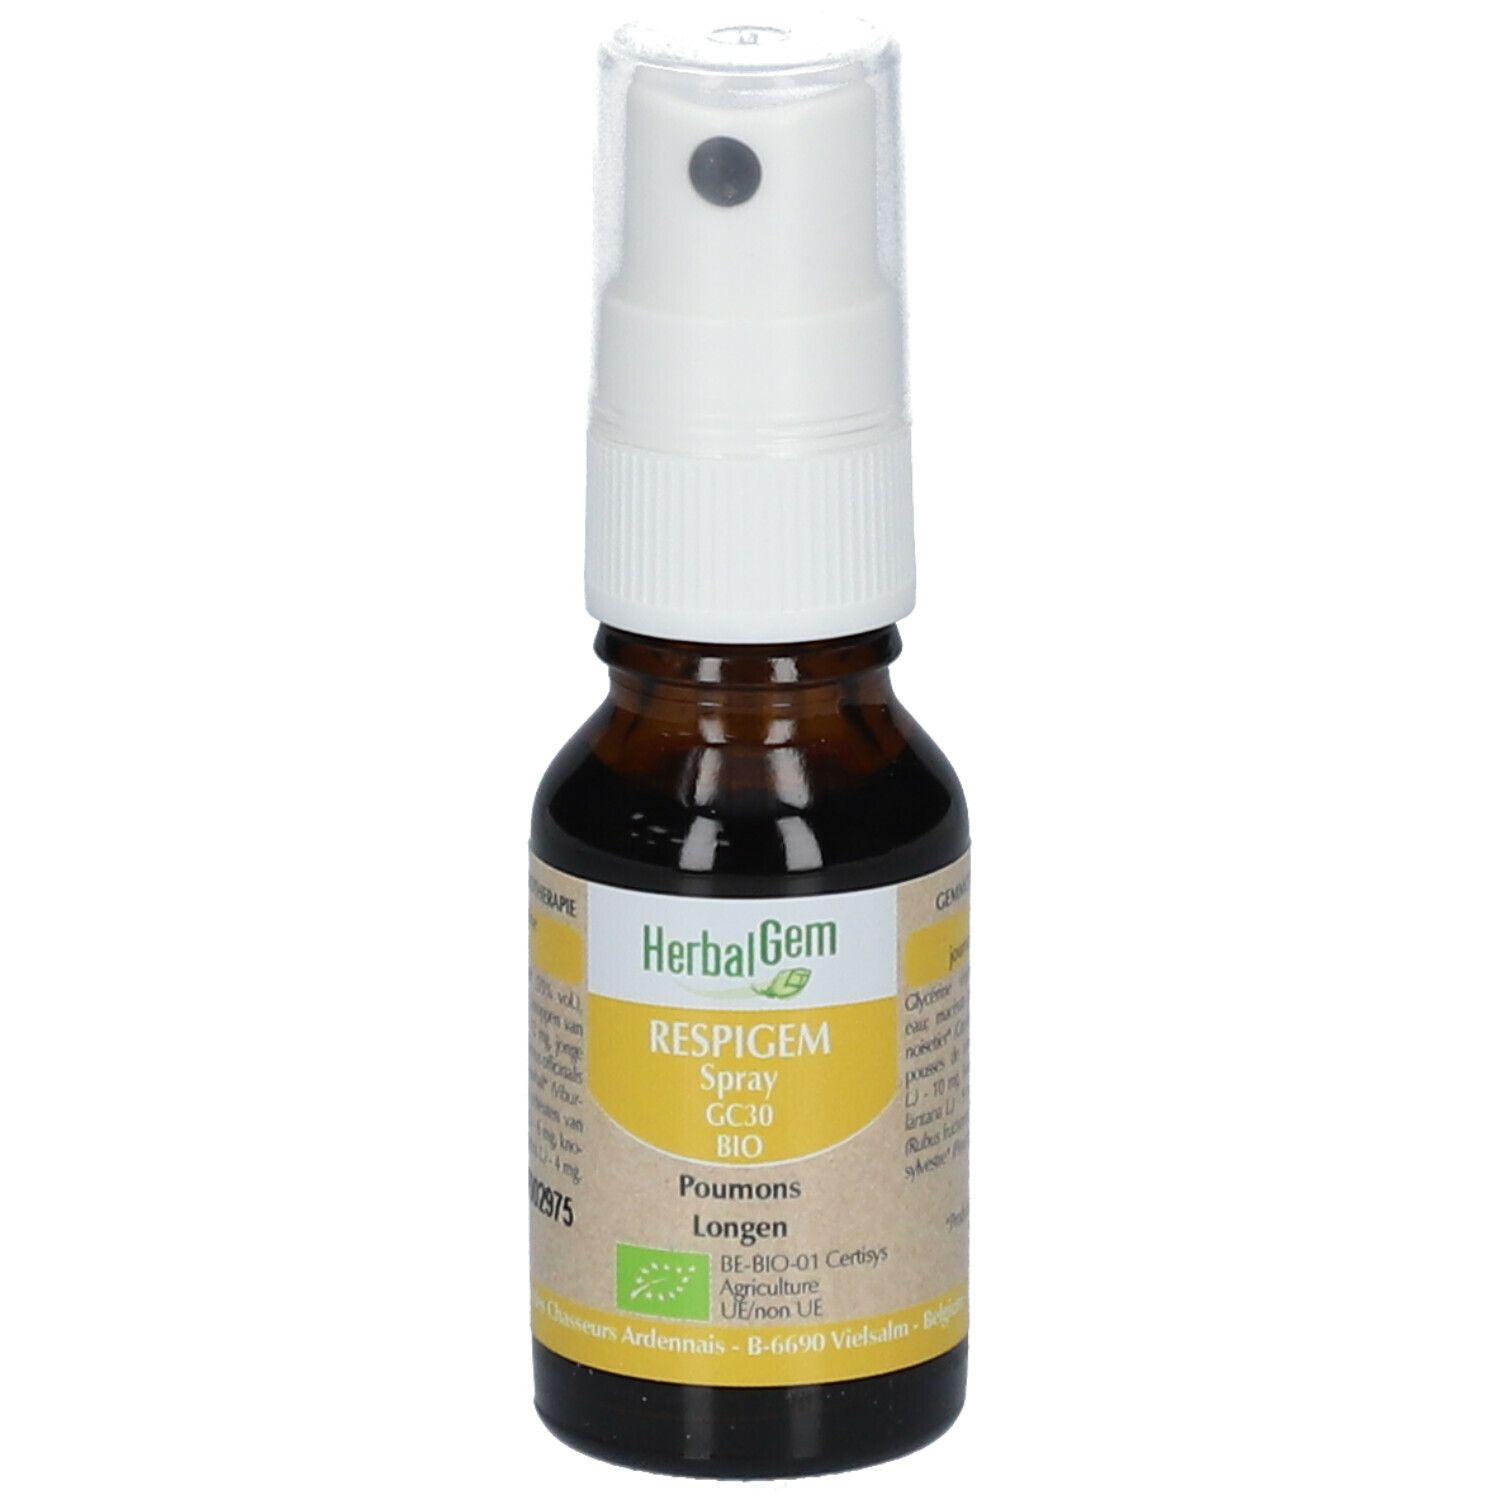 HerbalGem Respigem - Spray